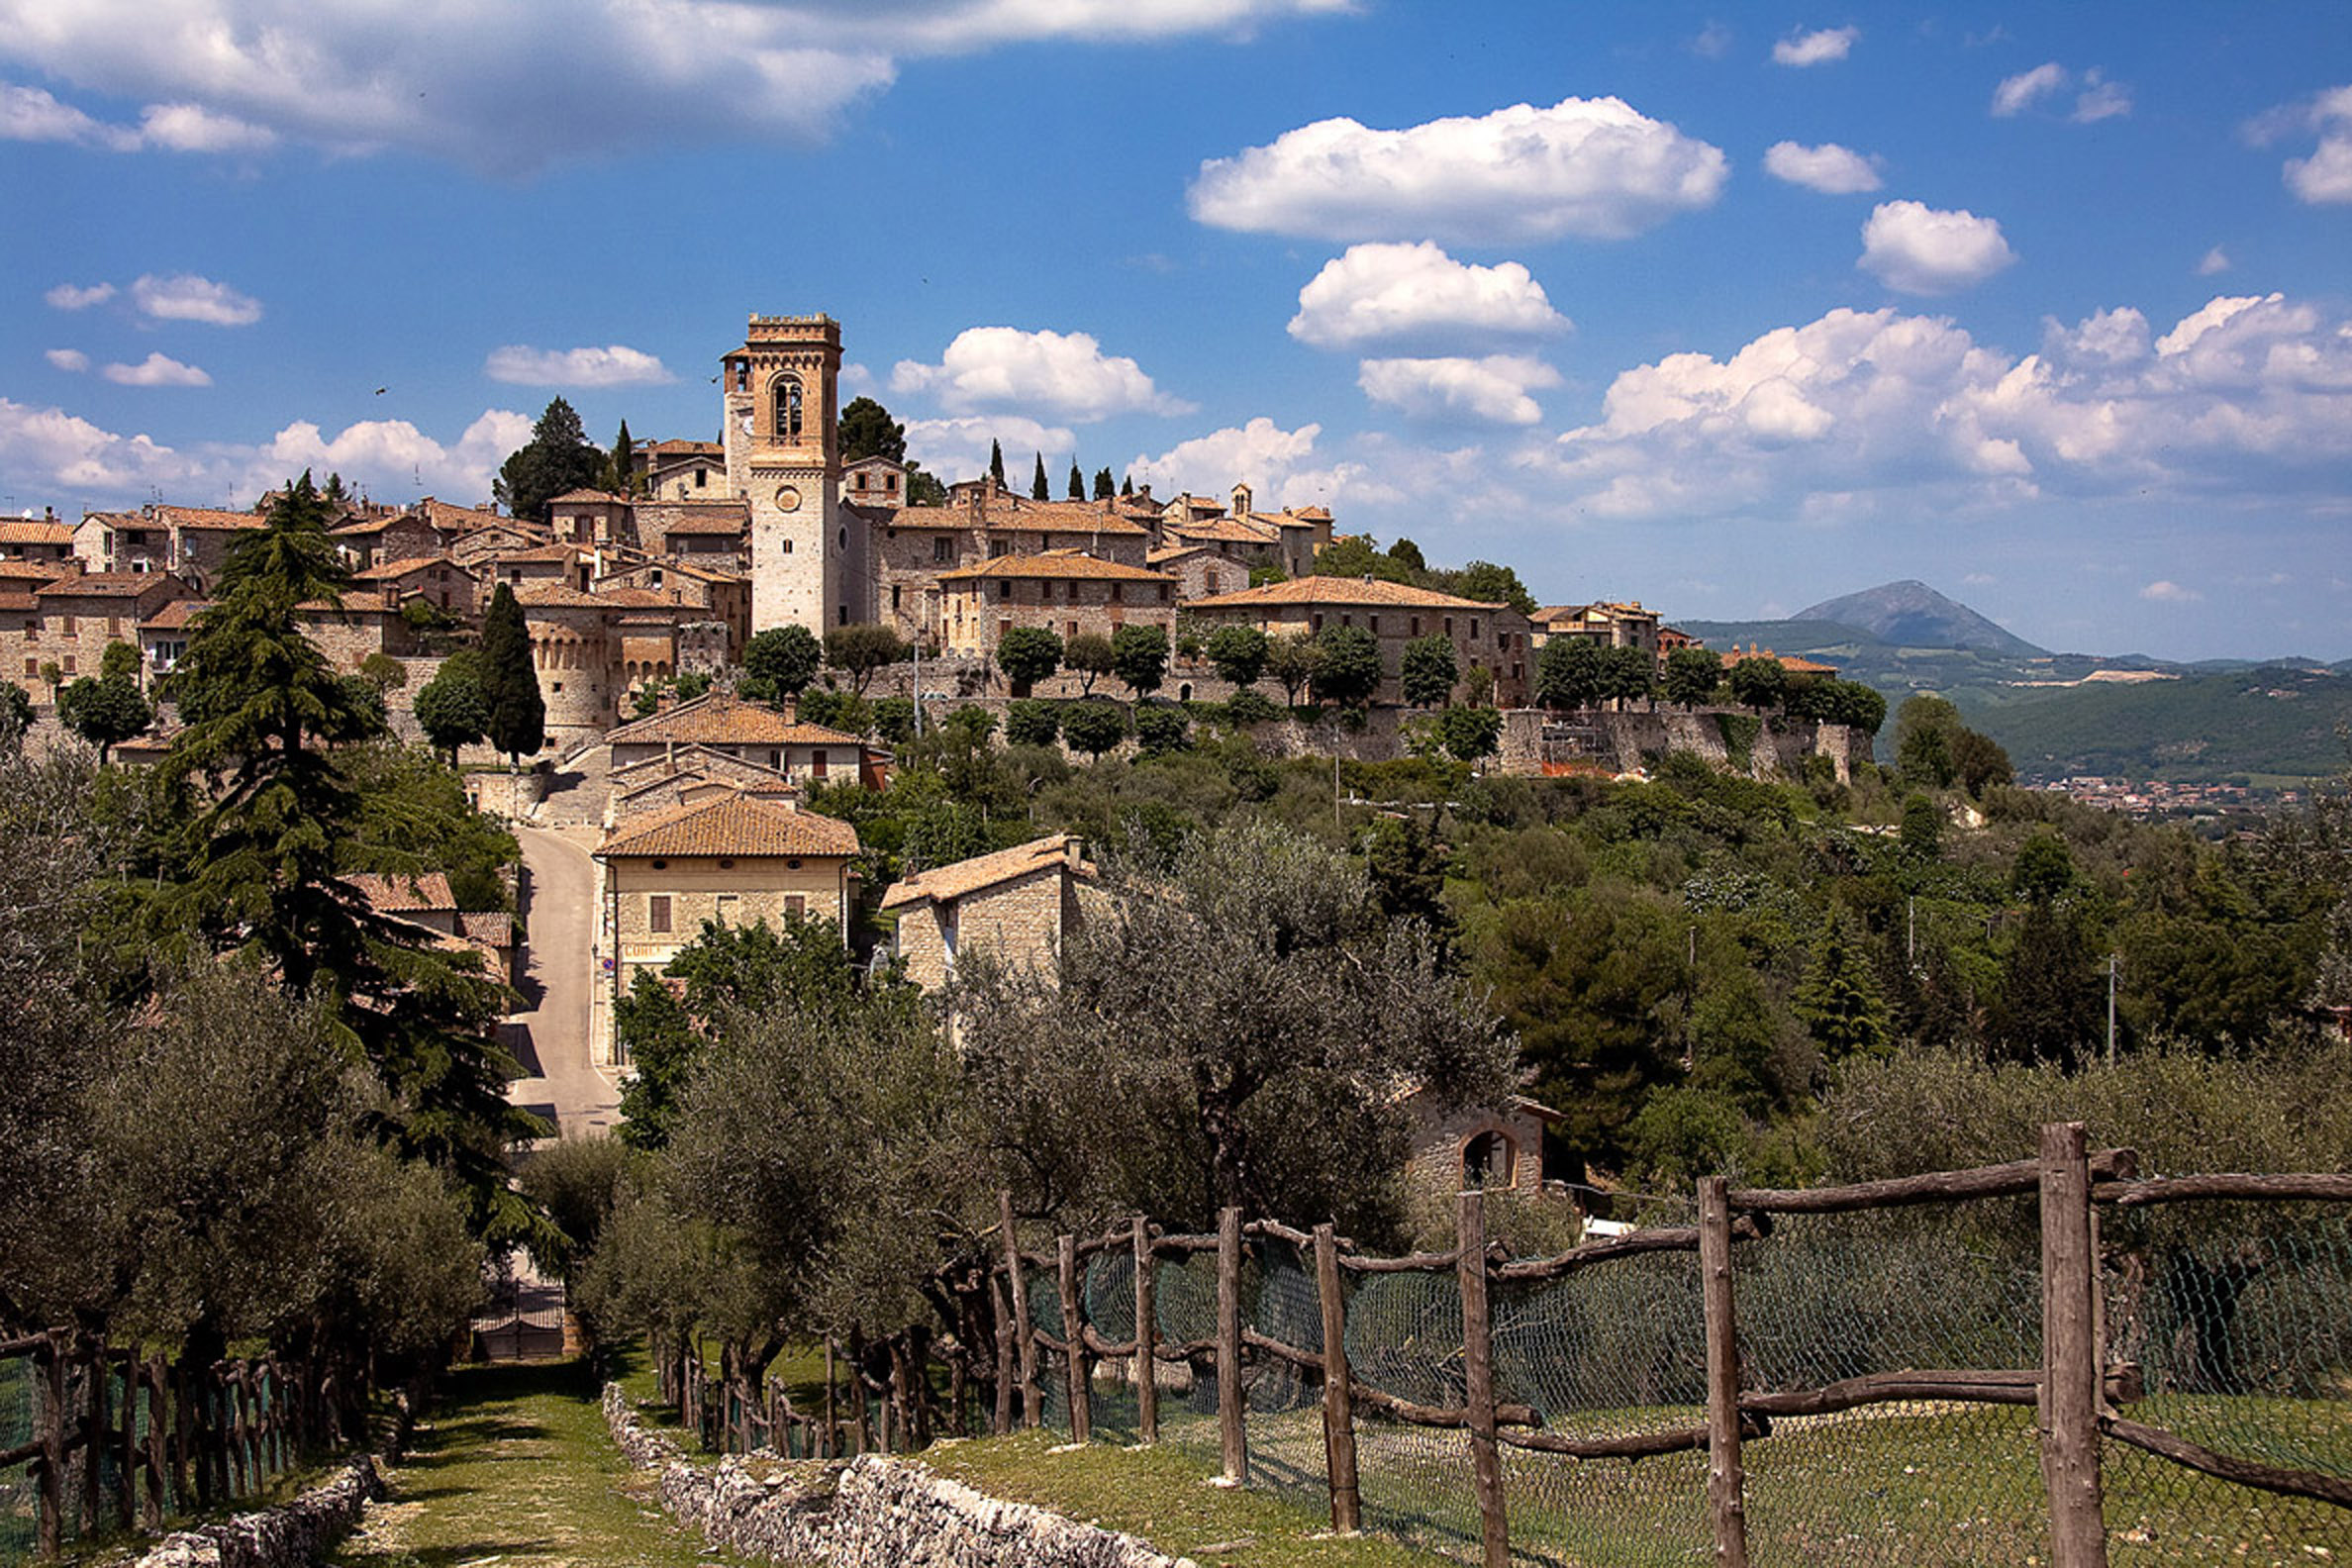 Agriturismi Perugia | Scopriamo Corciano